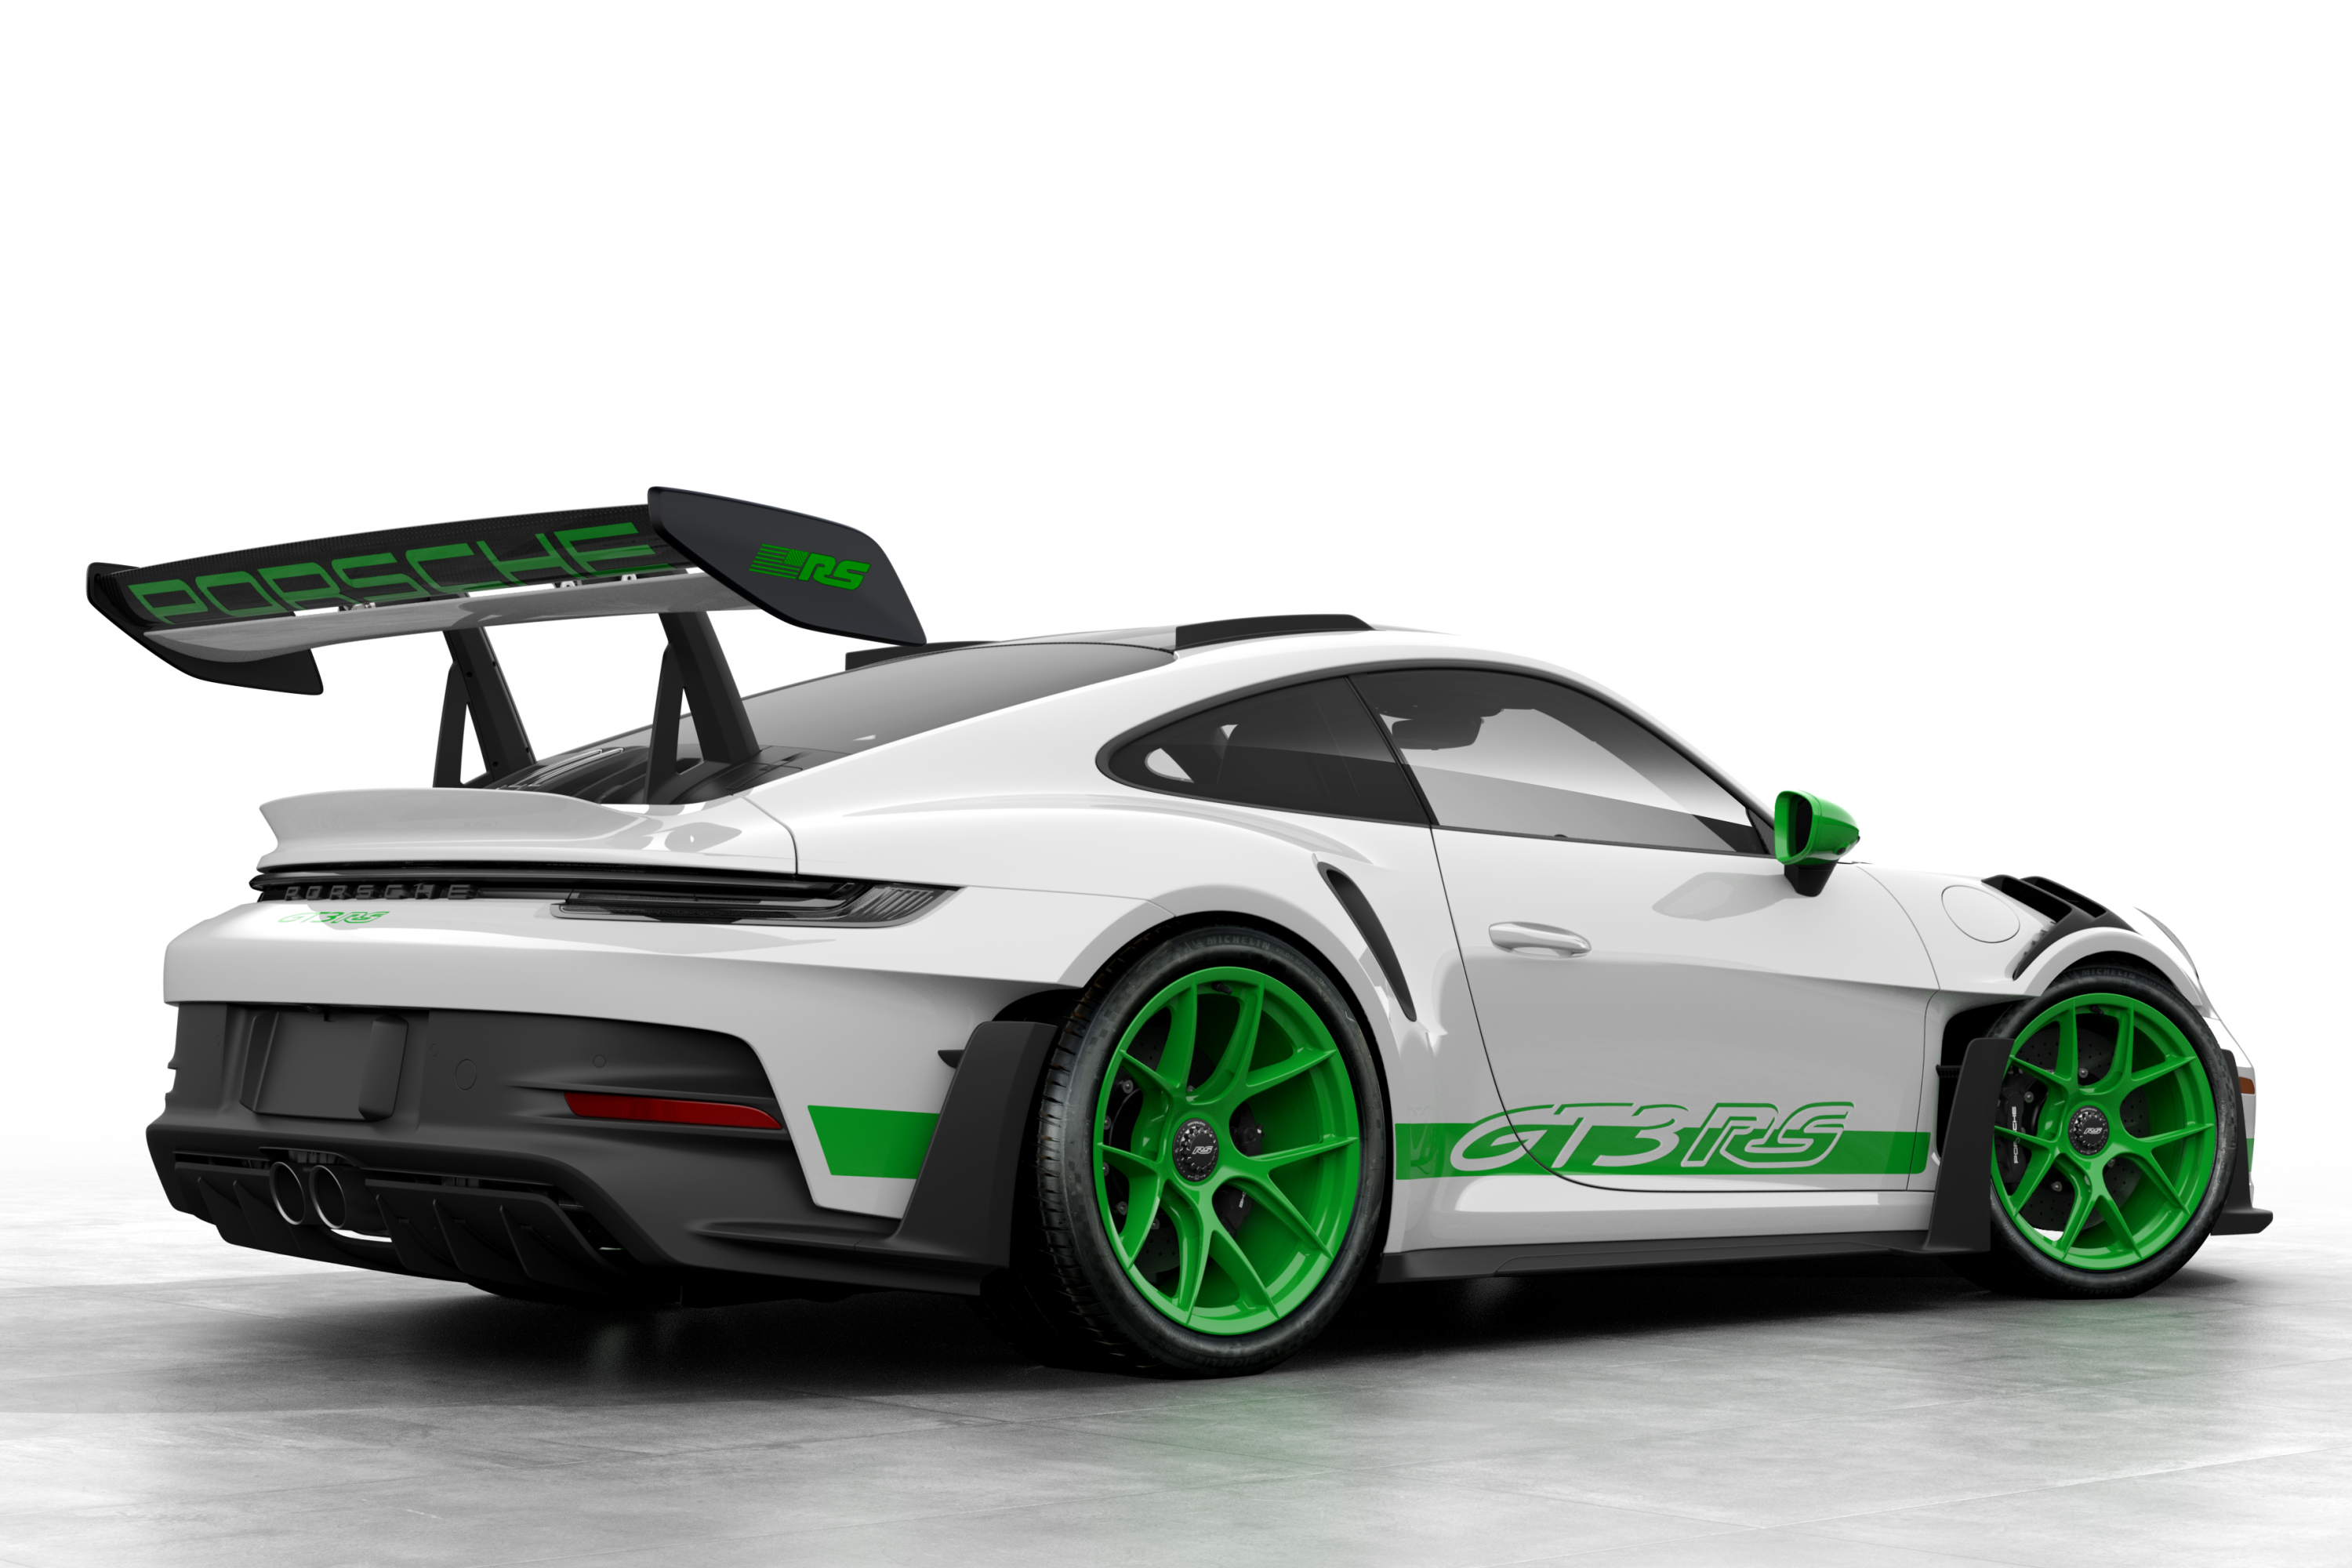  Porsche Gt3 Rs Hintergrundbild 3000x2000. Porsche 911 GT3 RS Tribute to Carrera RS pack confirmed for USA